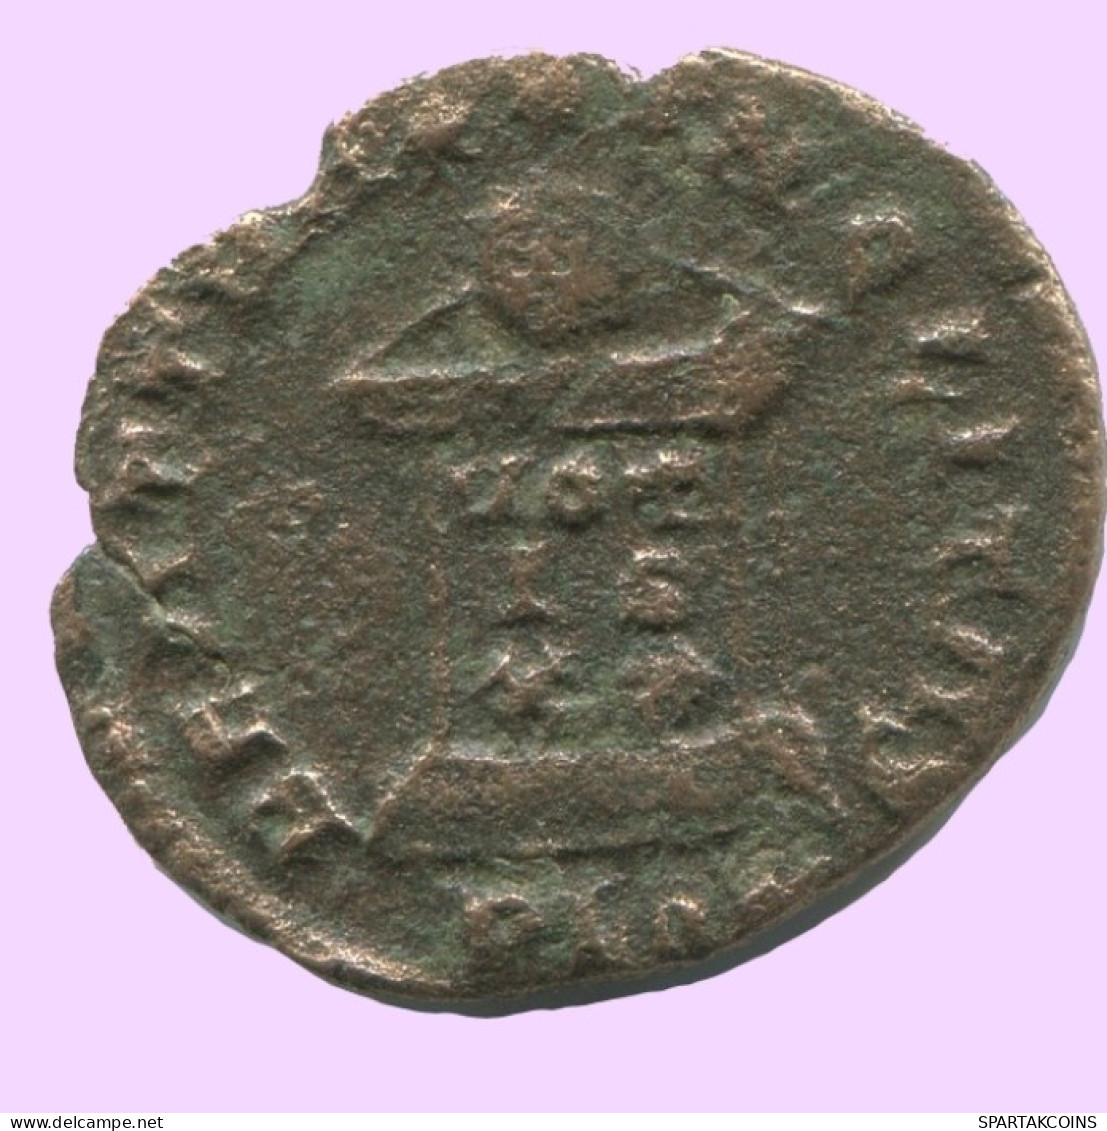 LATE ROMAN EMPIRE Follis Antique Authentique Roman Pièce 2g/20mm #ANT2021.7.F.A - Der Spätrömanischen Reich (363 / 476)